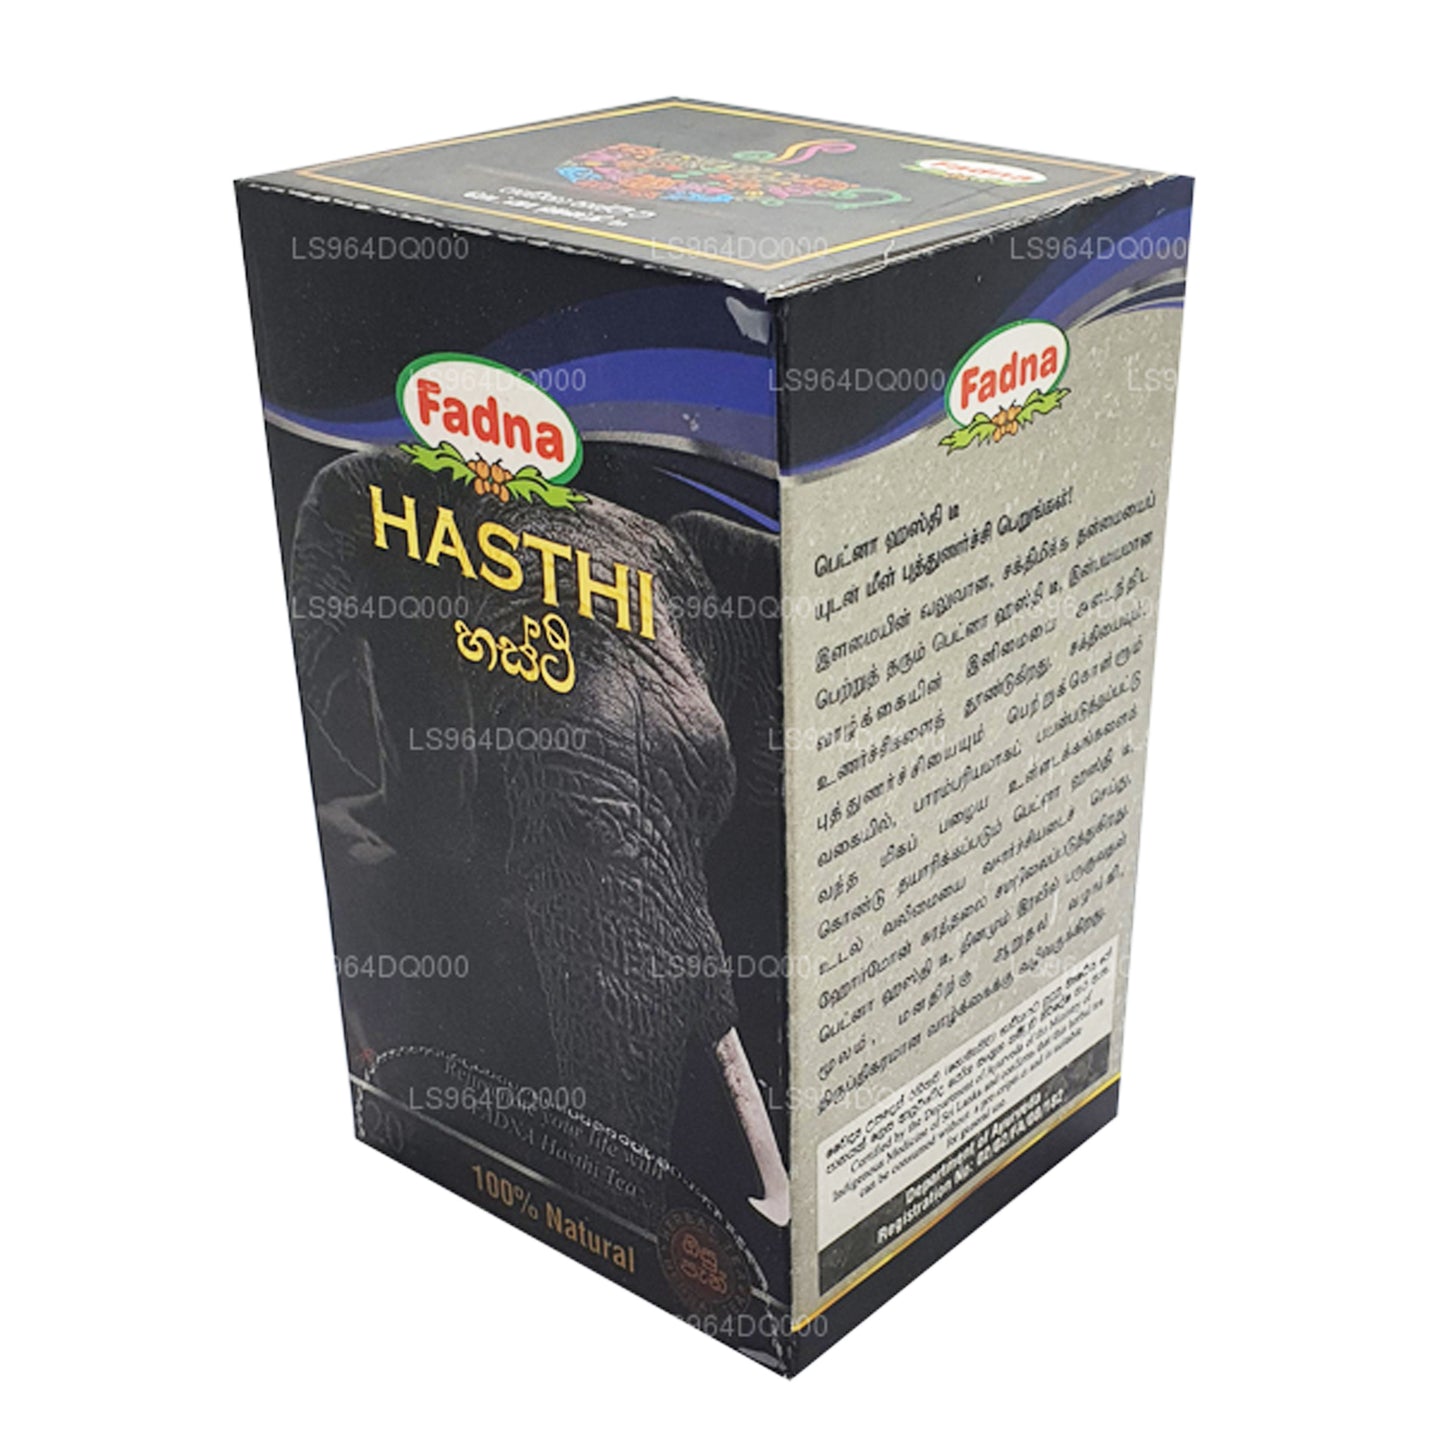 Fadna Hasthi 草本茶 (40g) 20 个茶包